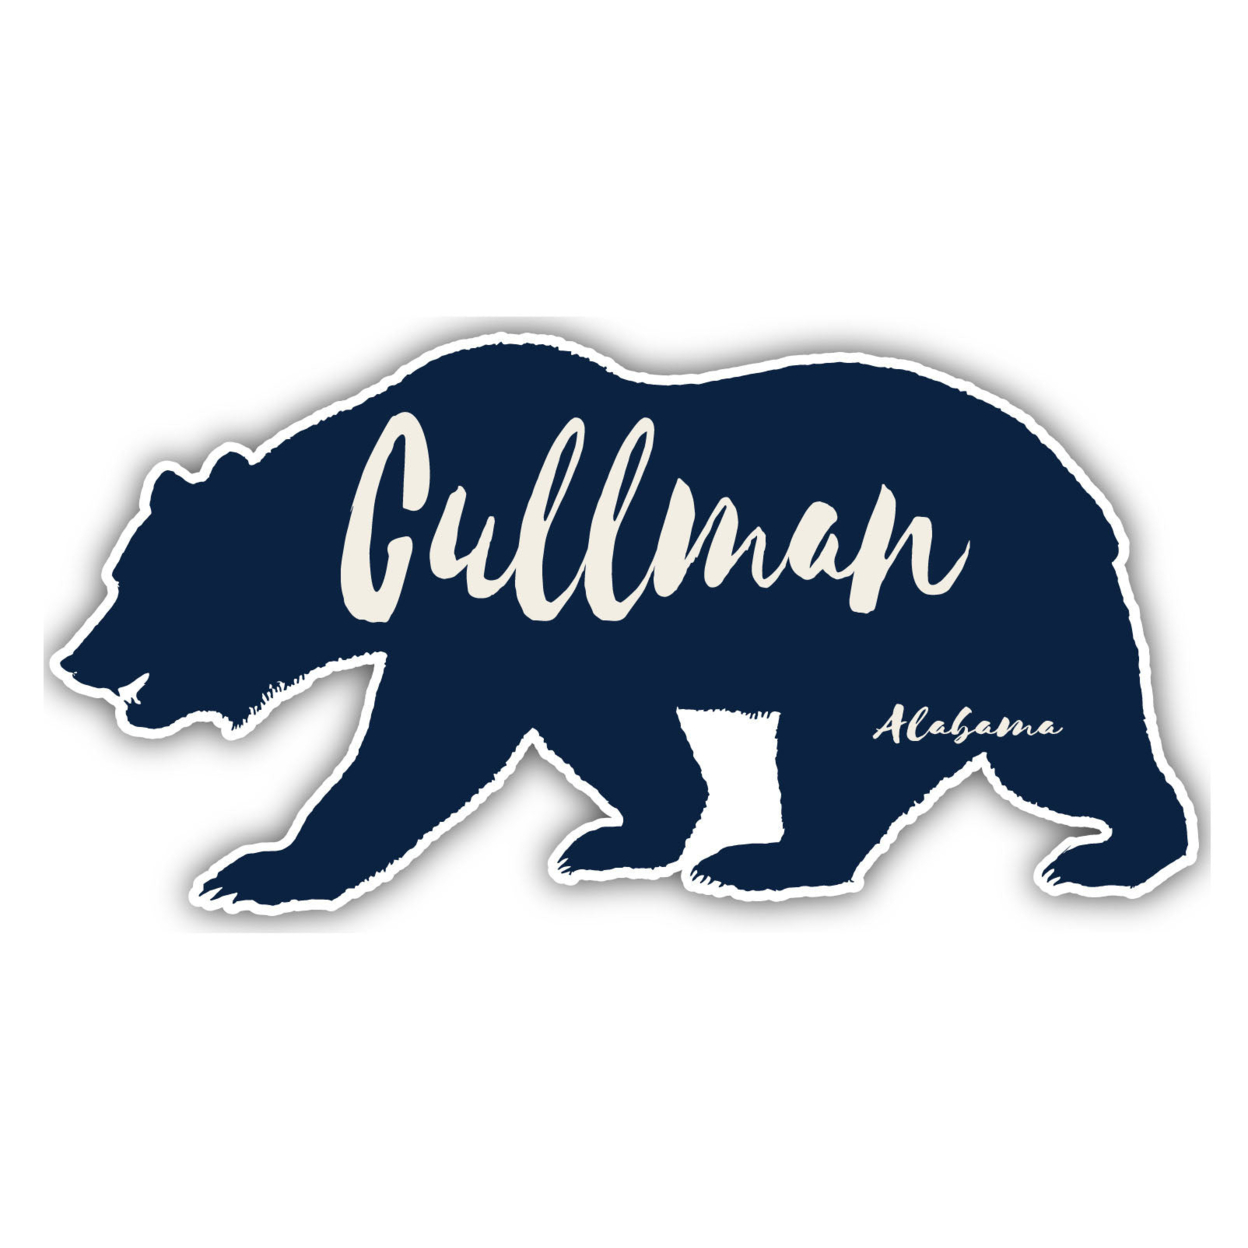 Cullman Alabama Souvenir Decorative Stickers (Choose Theme And Size) - Single Unit, 4-Inch, Bear